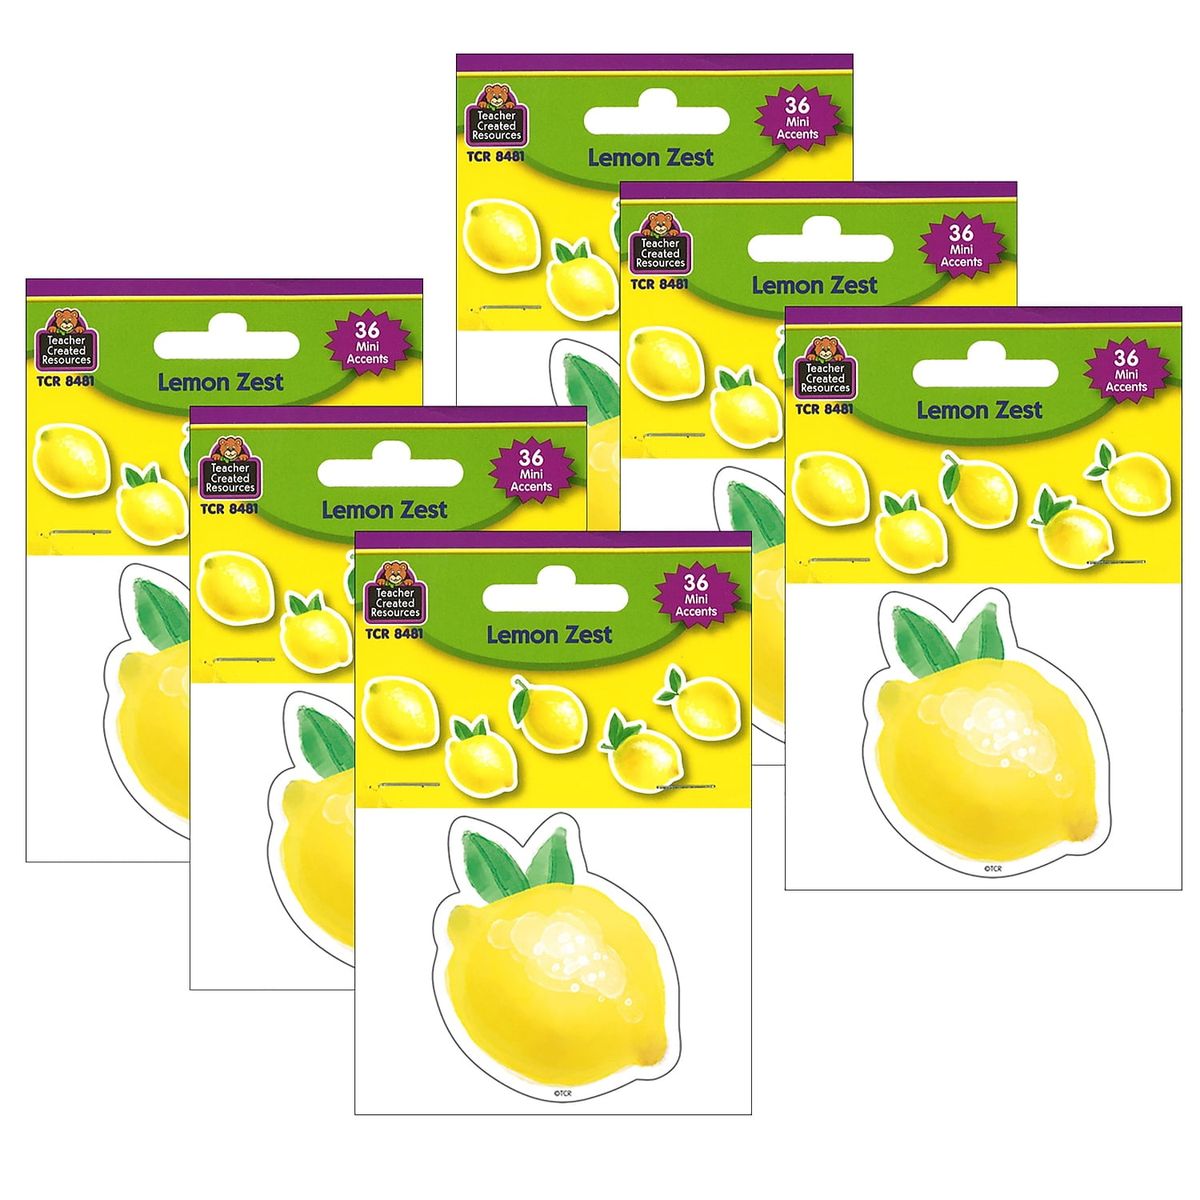 [RDY] [送料無料] Teacher Created Resources レモン・ゼスト ミニ・アクセント、1パック36個入り、6パック入り [楽天海外通販] | Teacher Created Resources Lemon Zest Mini Accents, 36 Per Pack, 6 Packs